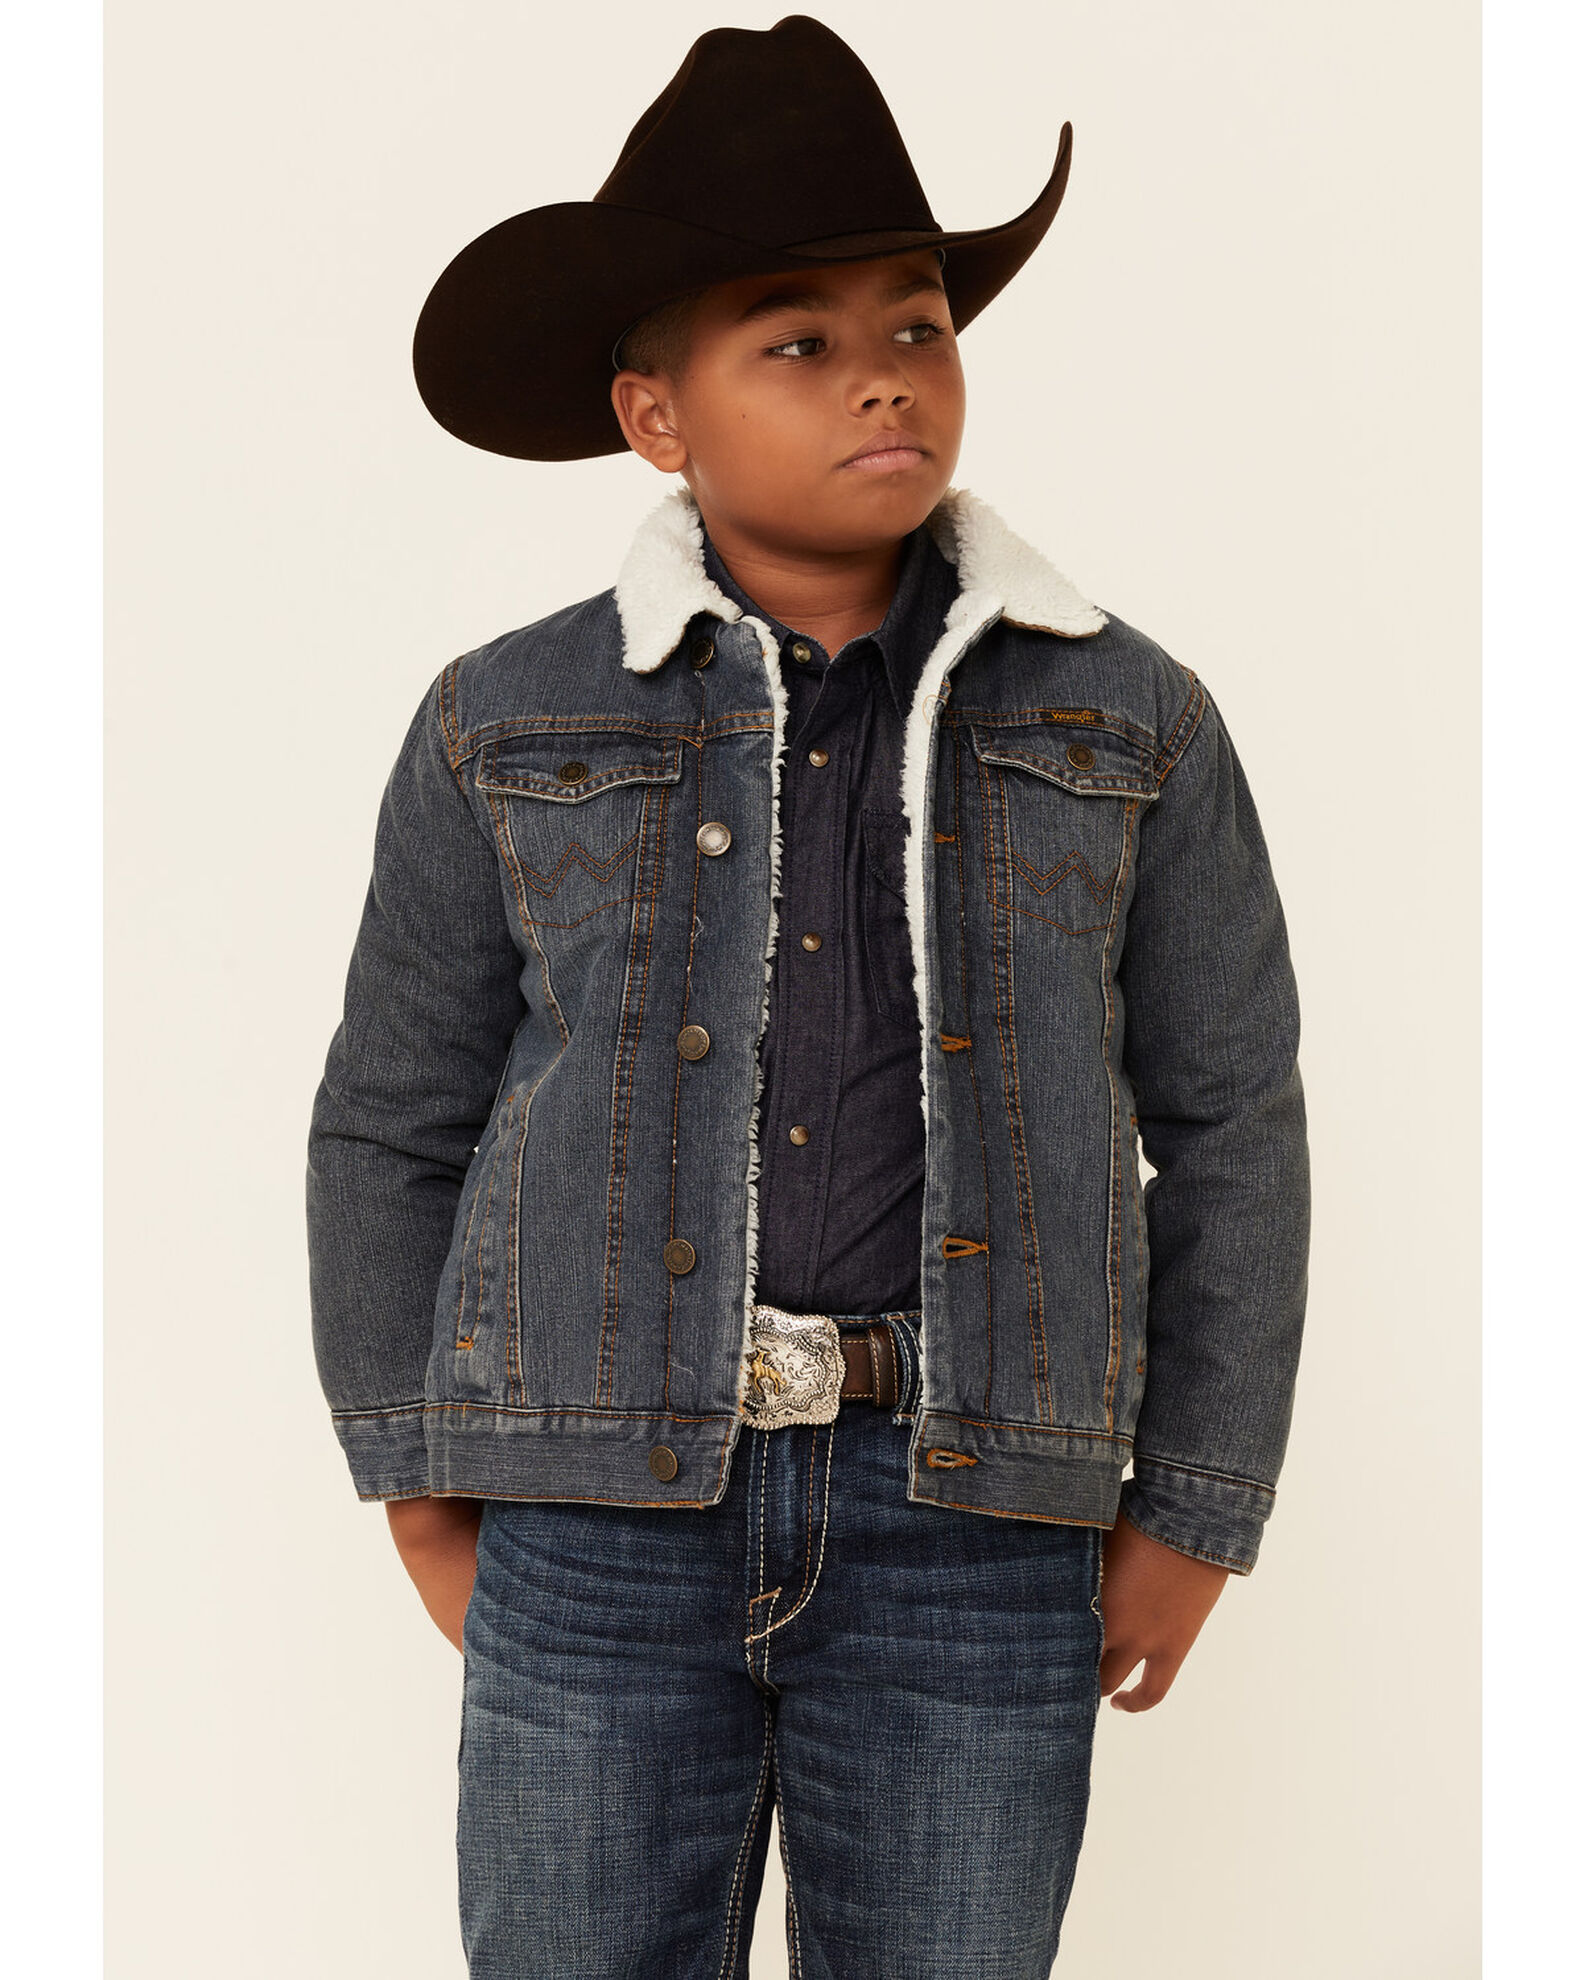 Product Name: Wrangler Boys' Rustic Sherpa Lined Denim Jacket